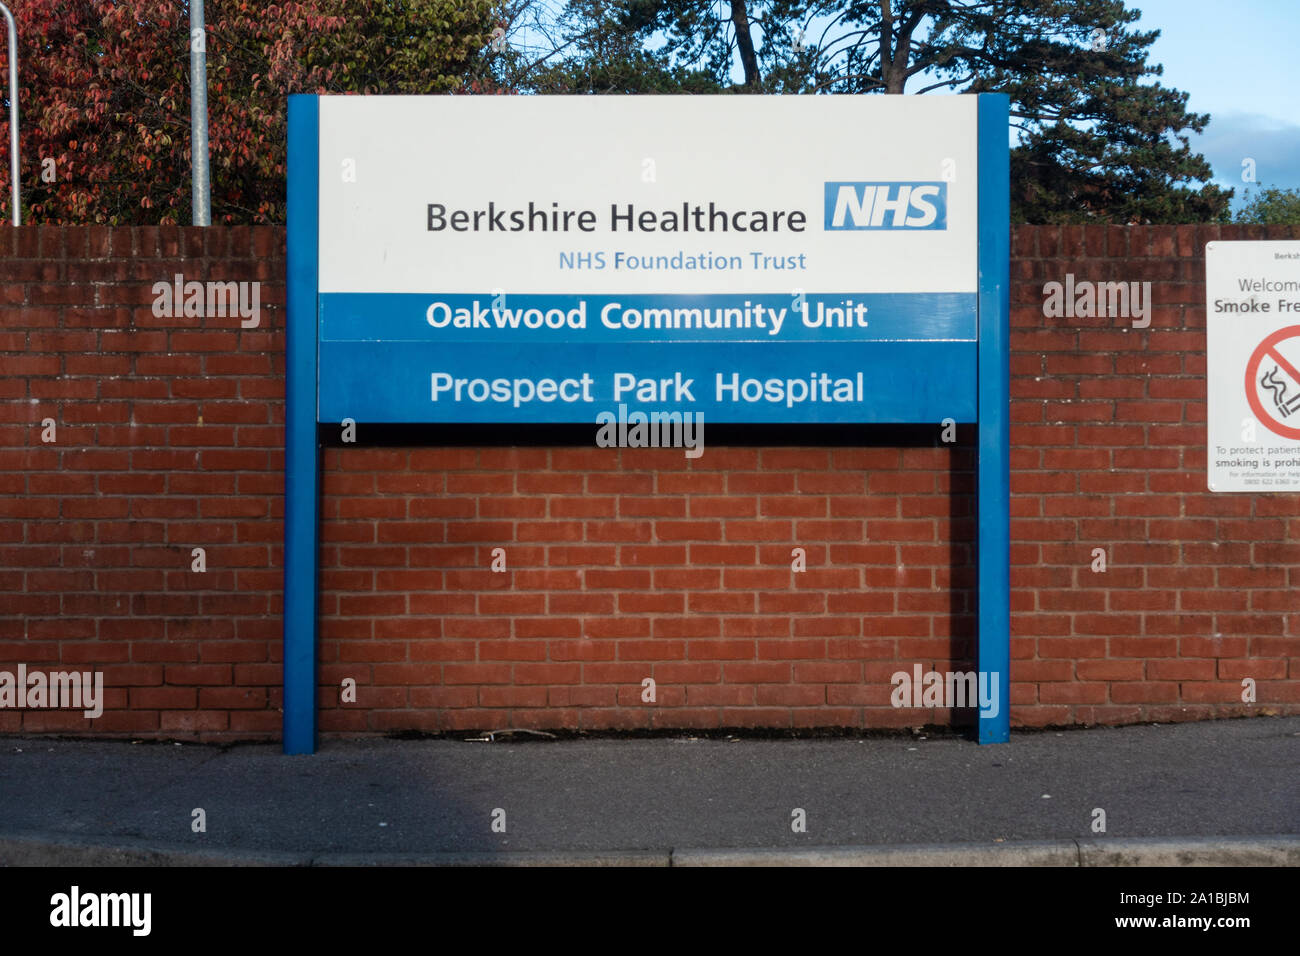 Prospect Park Hospital in Reading, Berkshire, UK Stock Photo